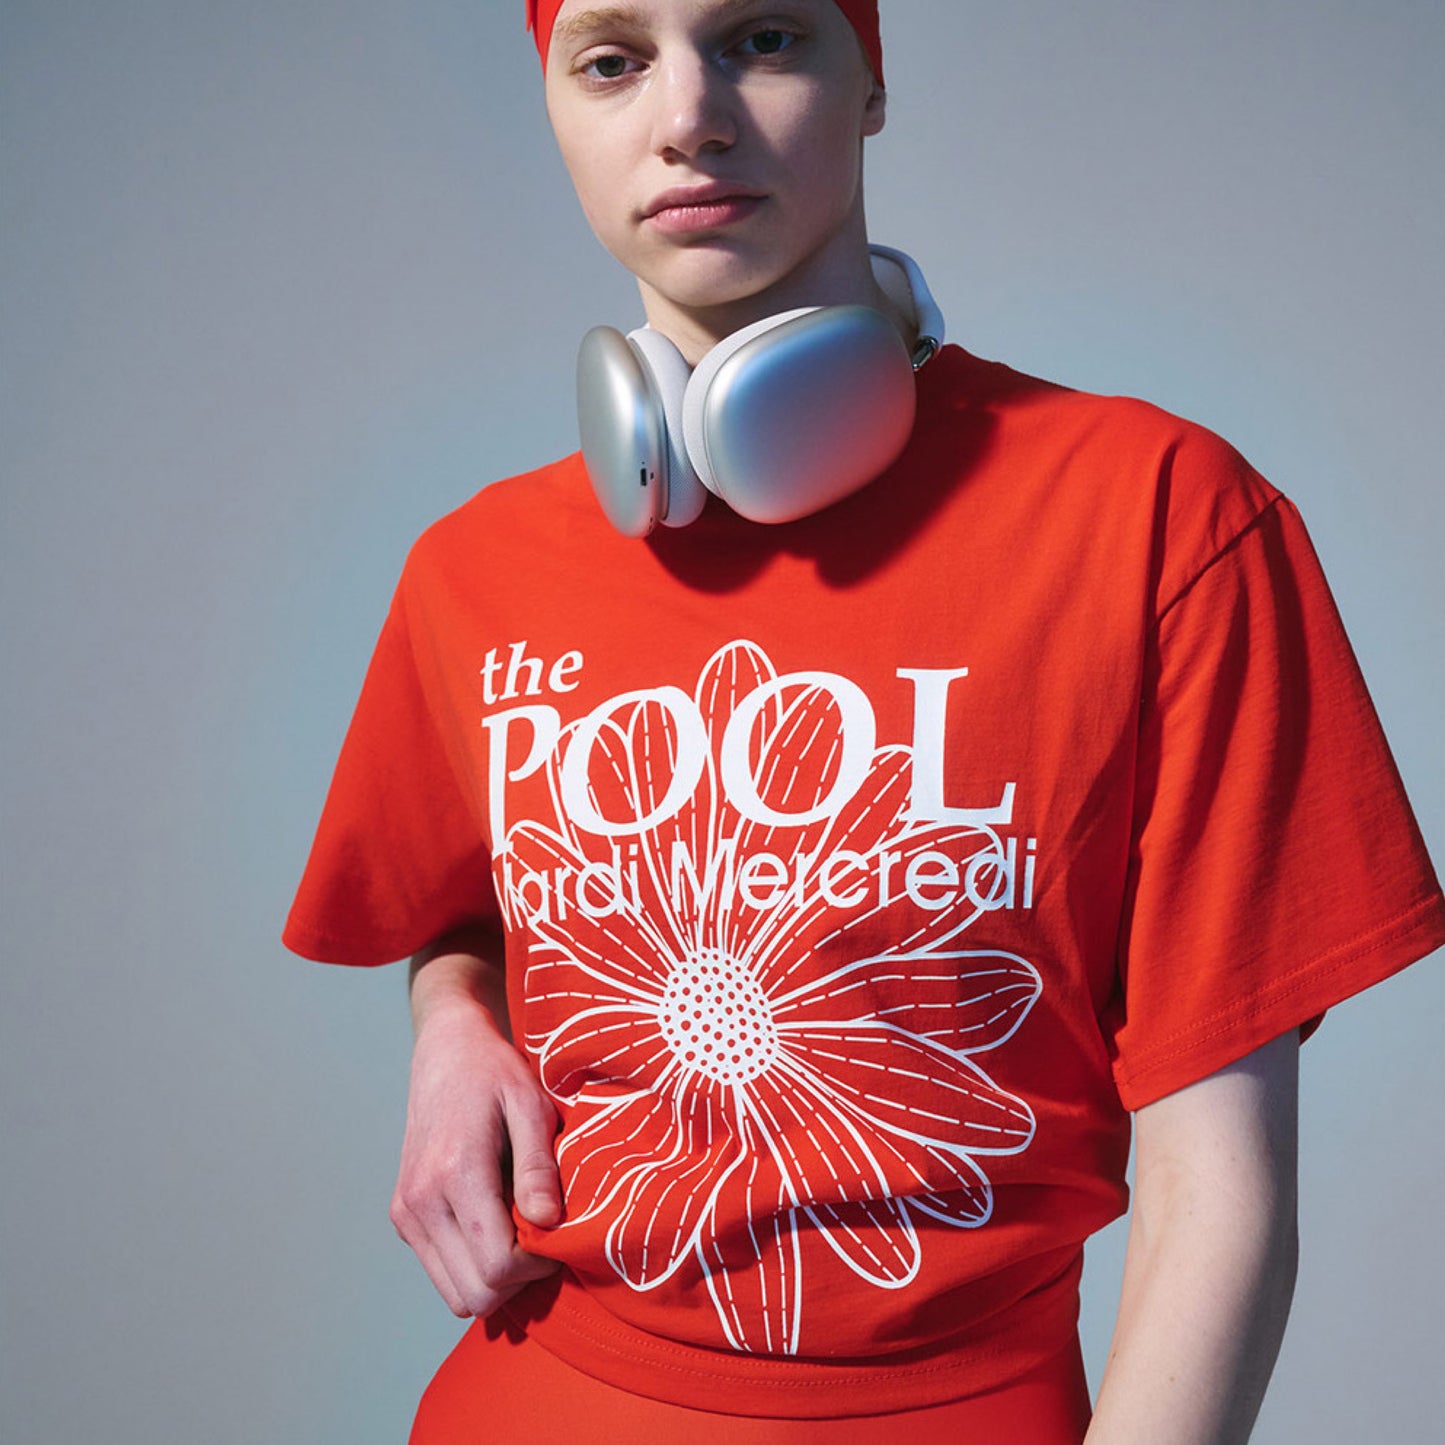 Mardi Mercredi (Flowermardi The Pool) T-Shirt